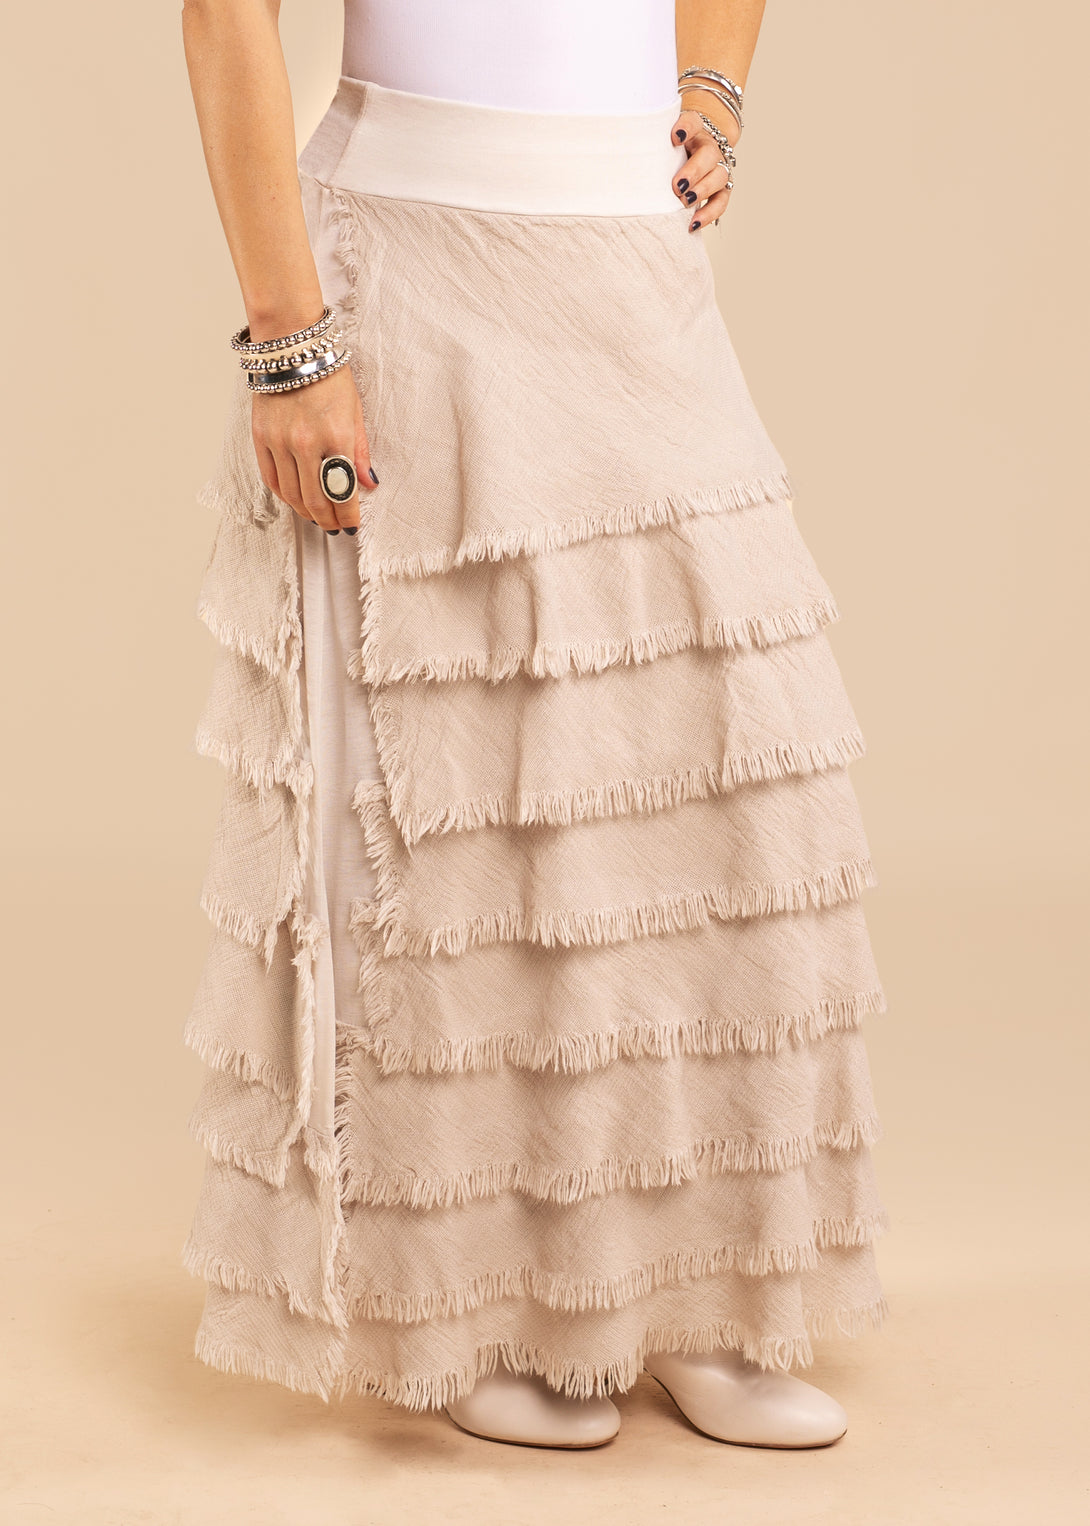 Julie Linen Skirt in Latte - Imagine Fashion